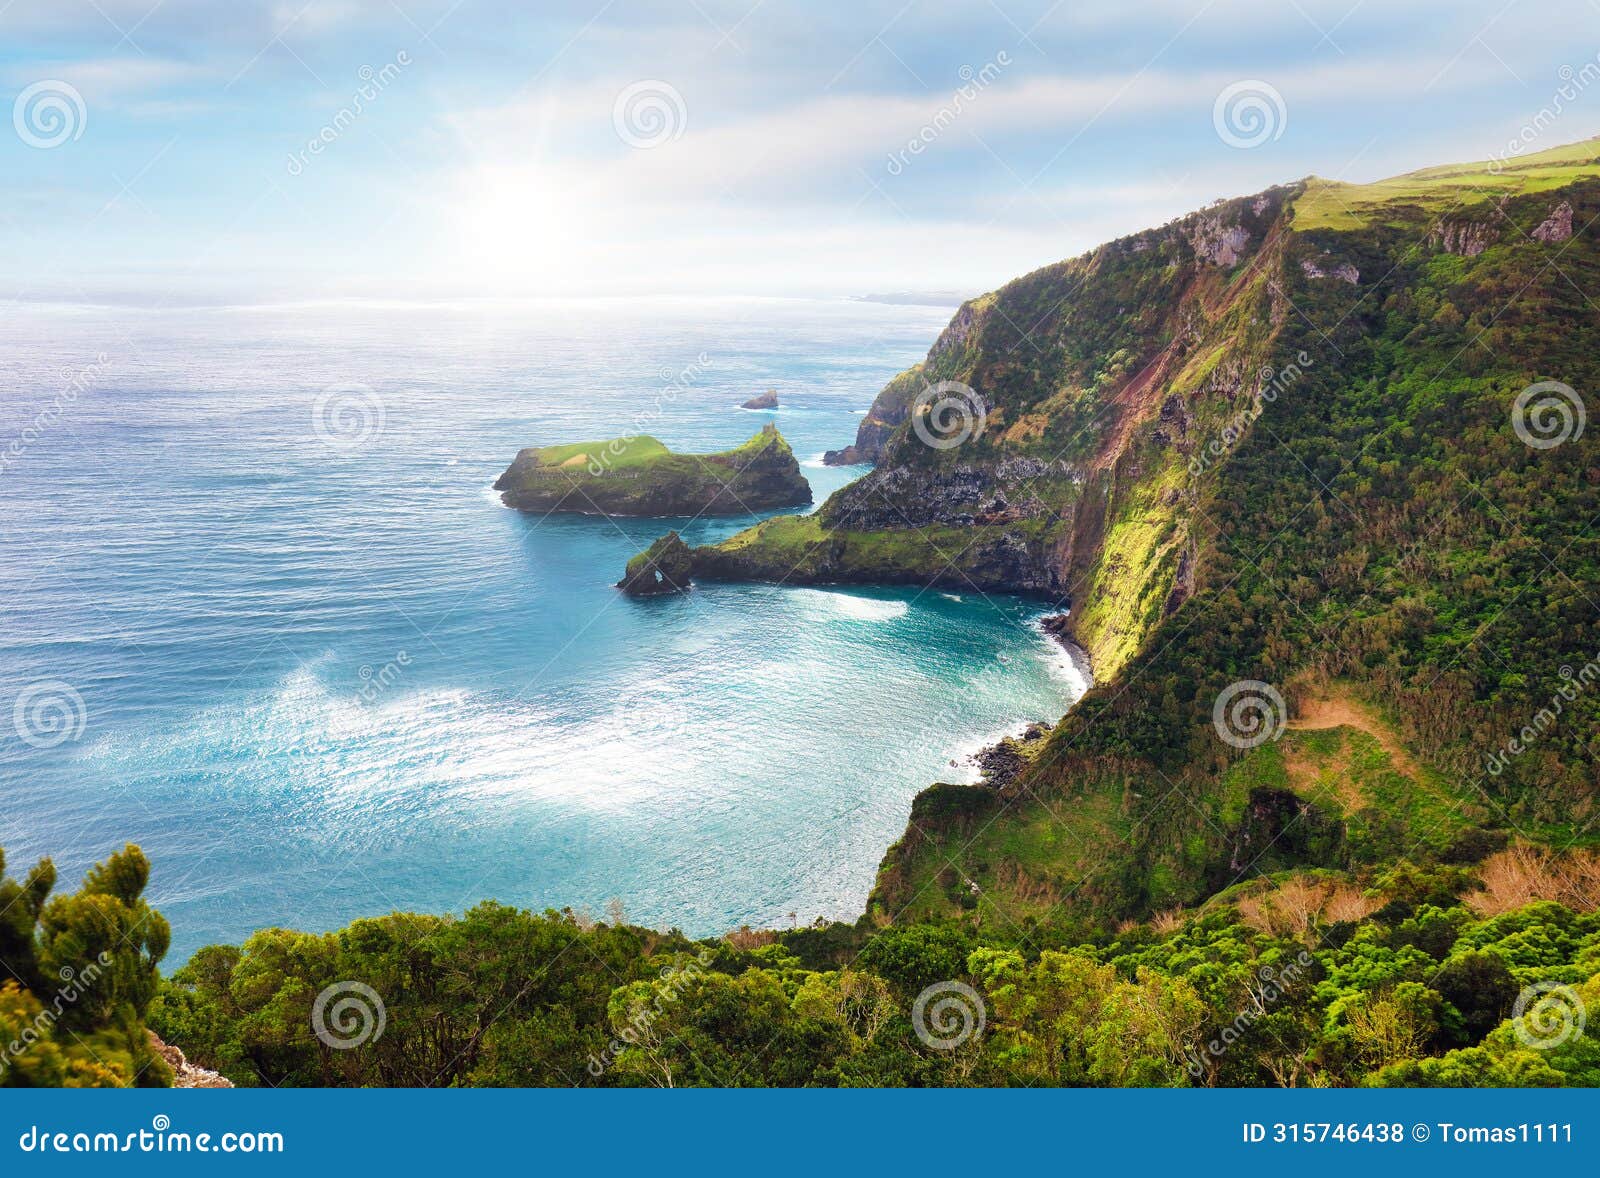 azores - flrores island - view from miradouro do ilheu furado towards the atlantic ocean and the sea cliffs with sun and blue sky